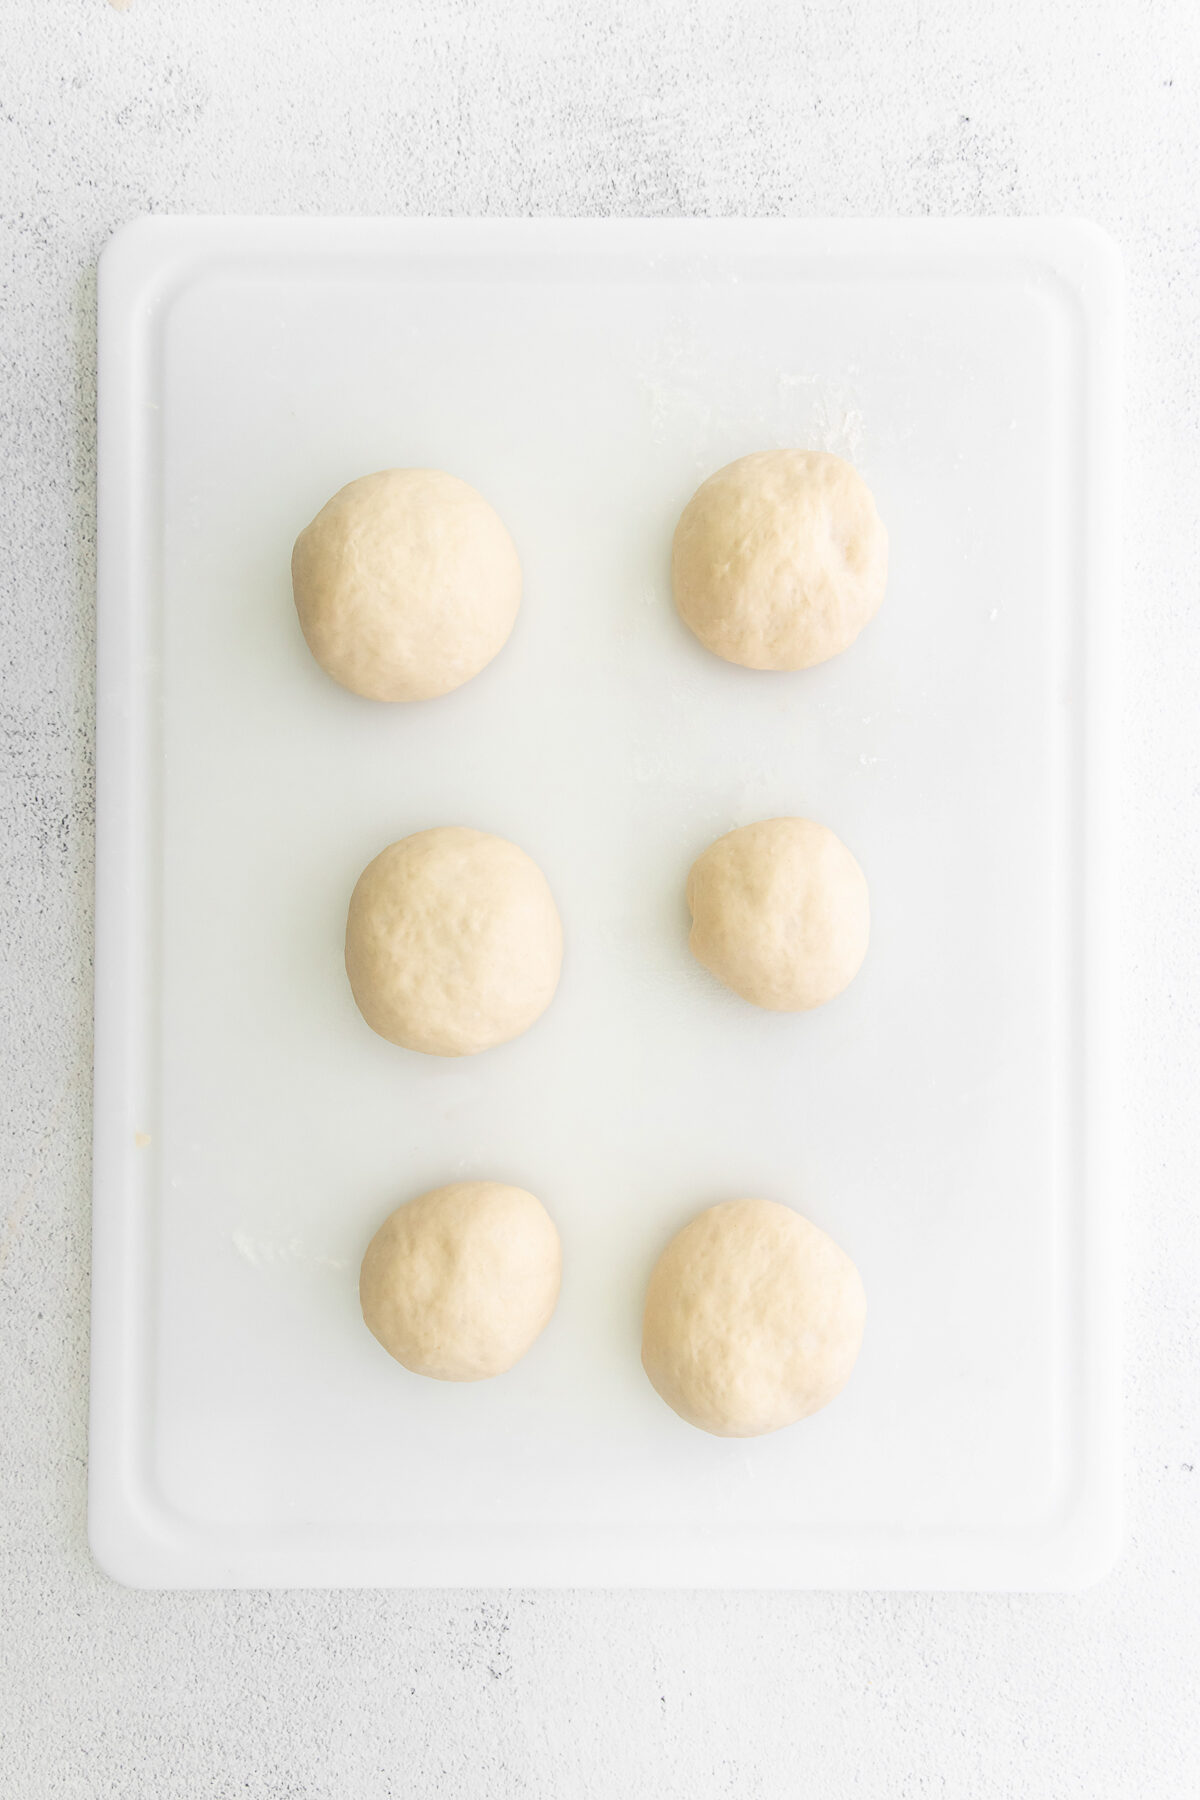 5 dough balls on a cutting board.